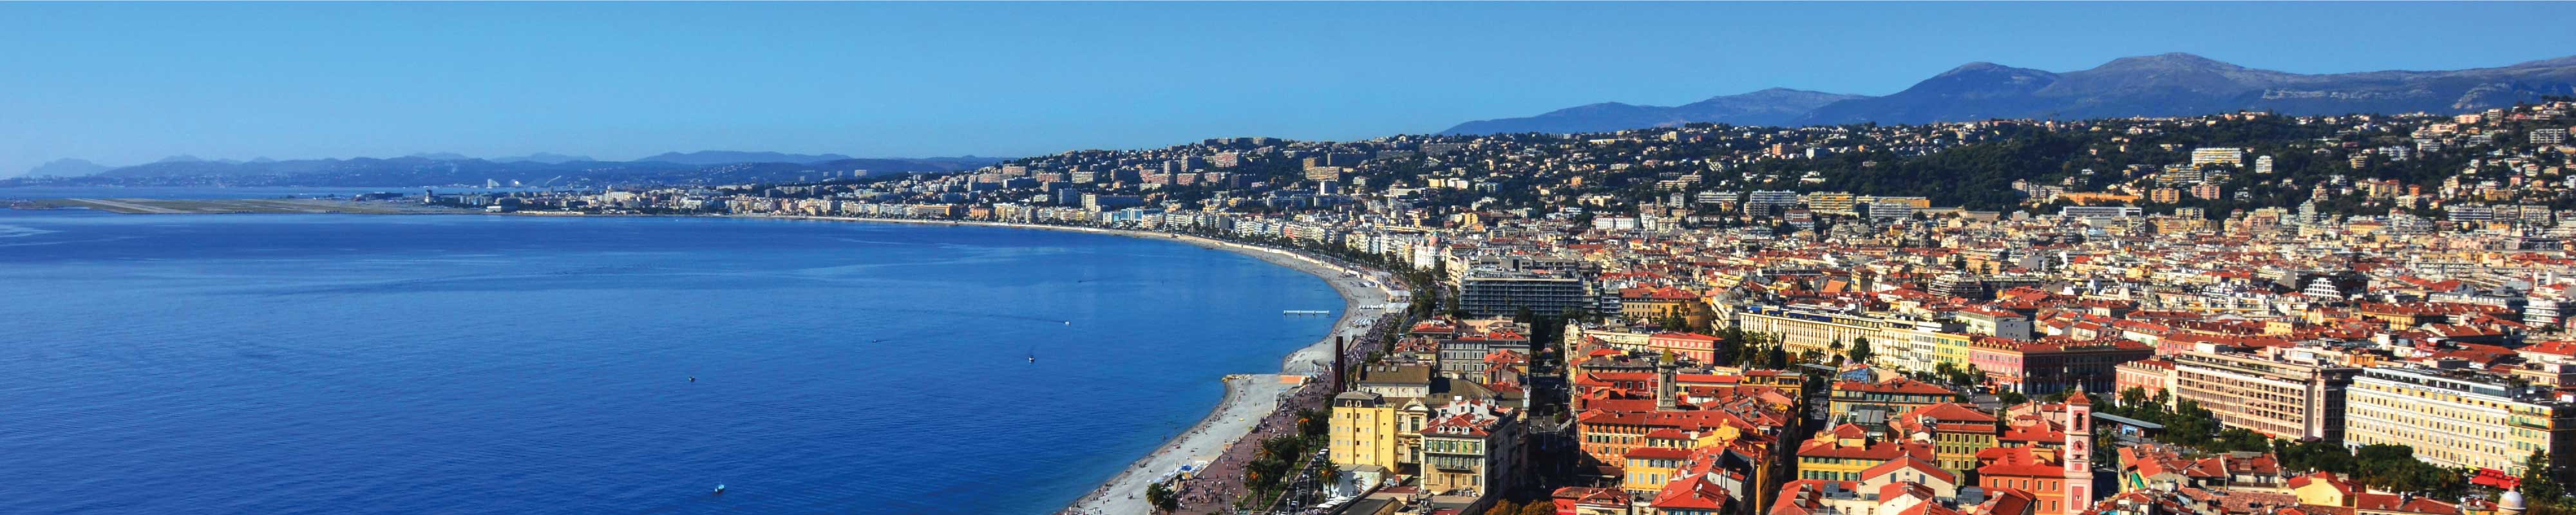 行李寄存 | Promenade des Anglais in Nice - Nannybag